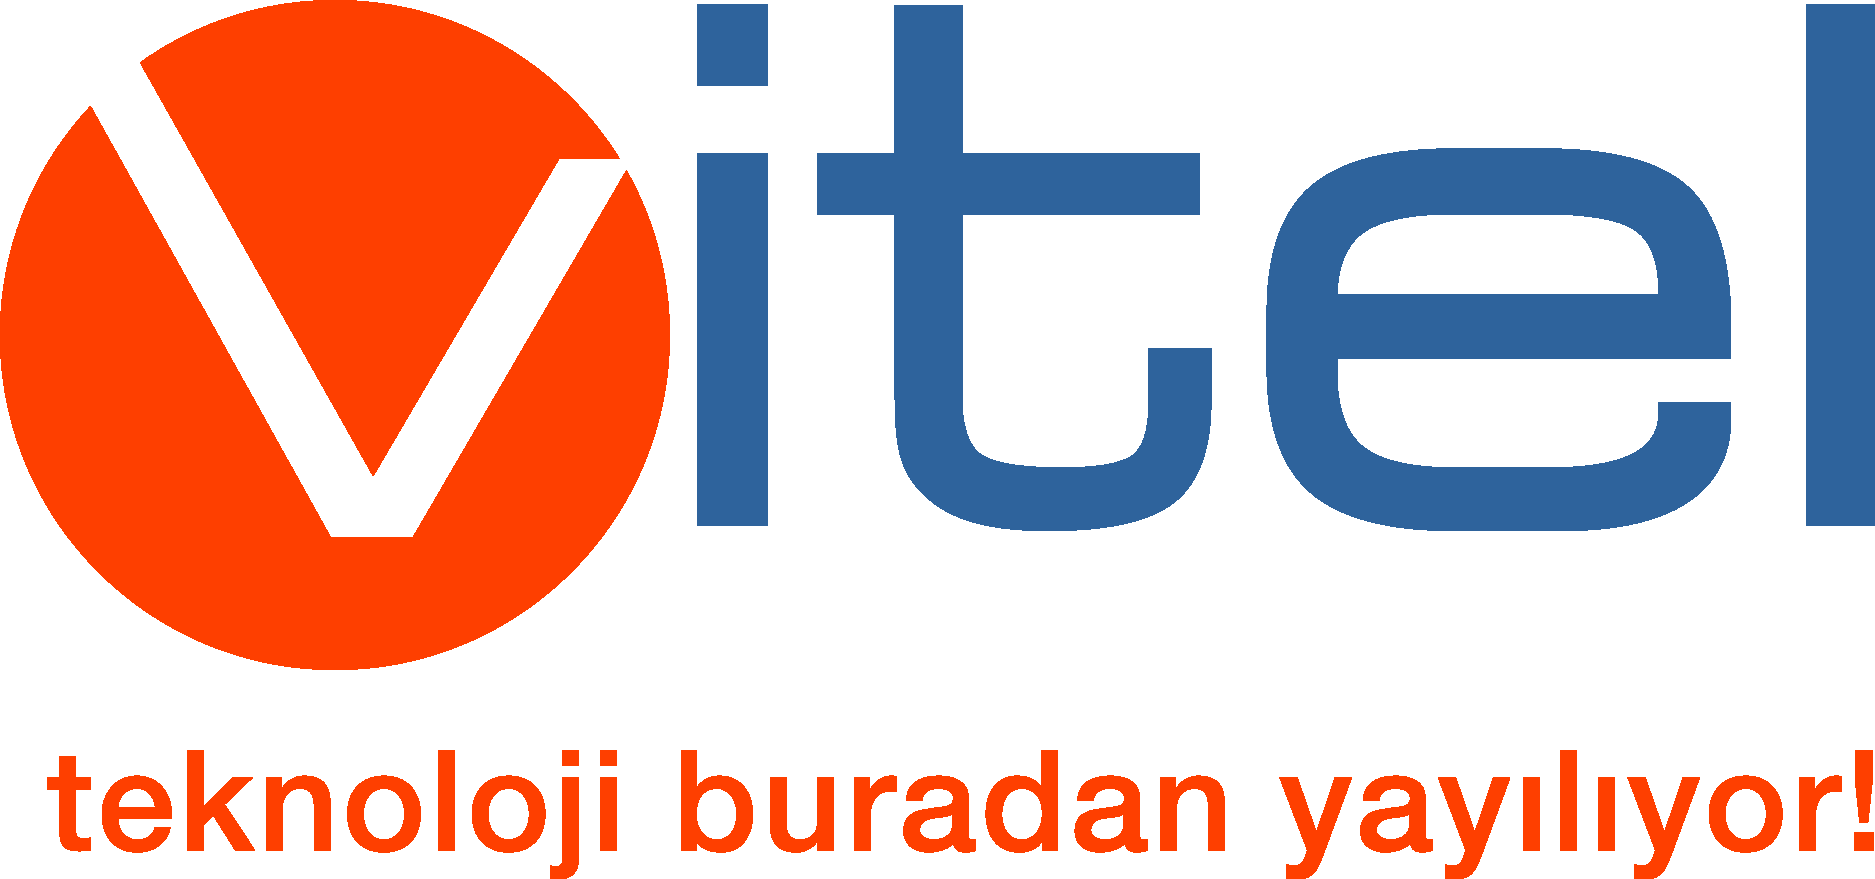 Vitel Logo Vector